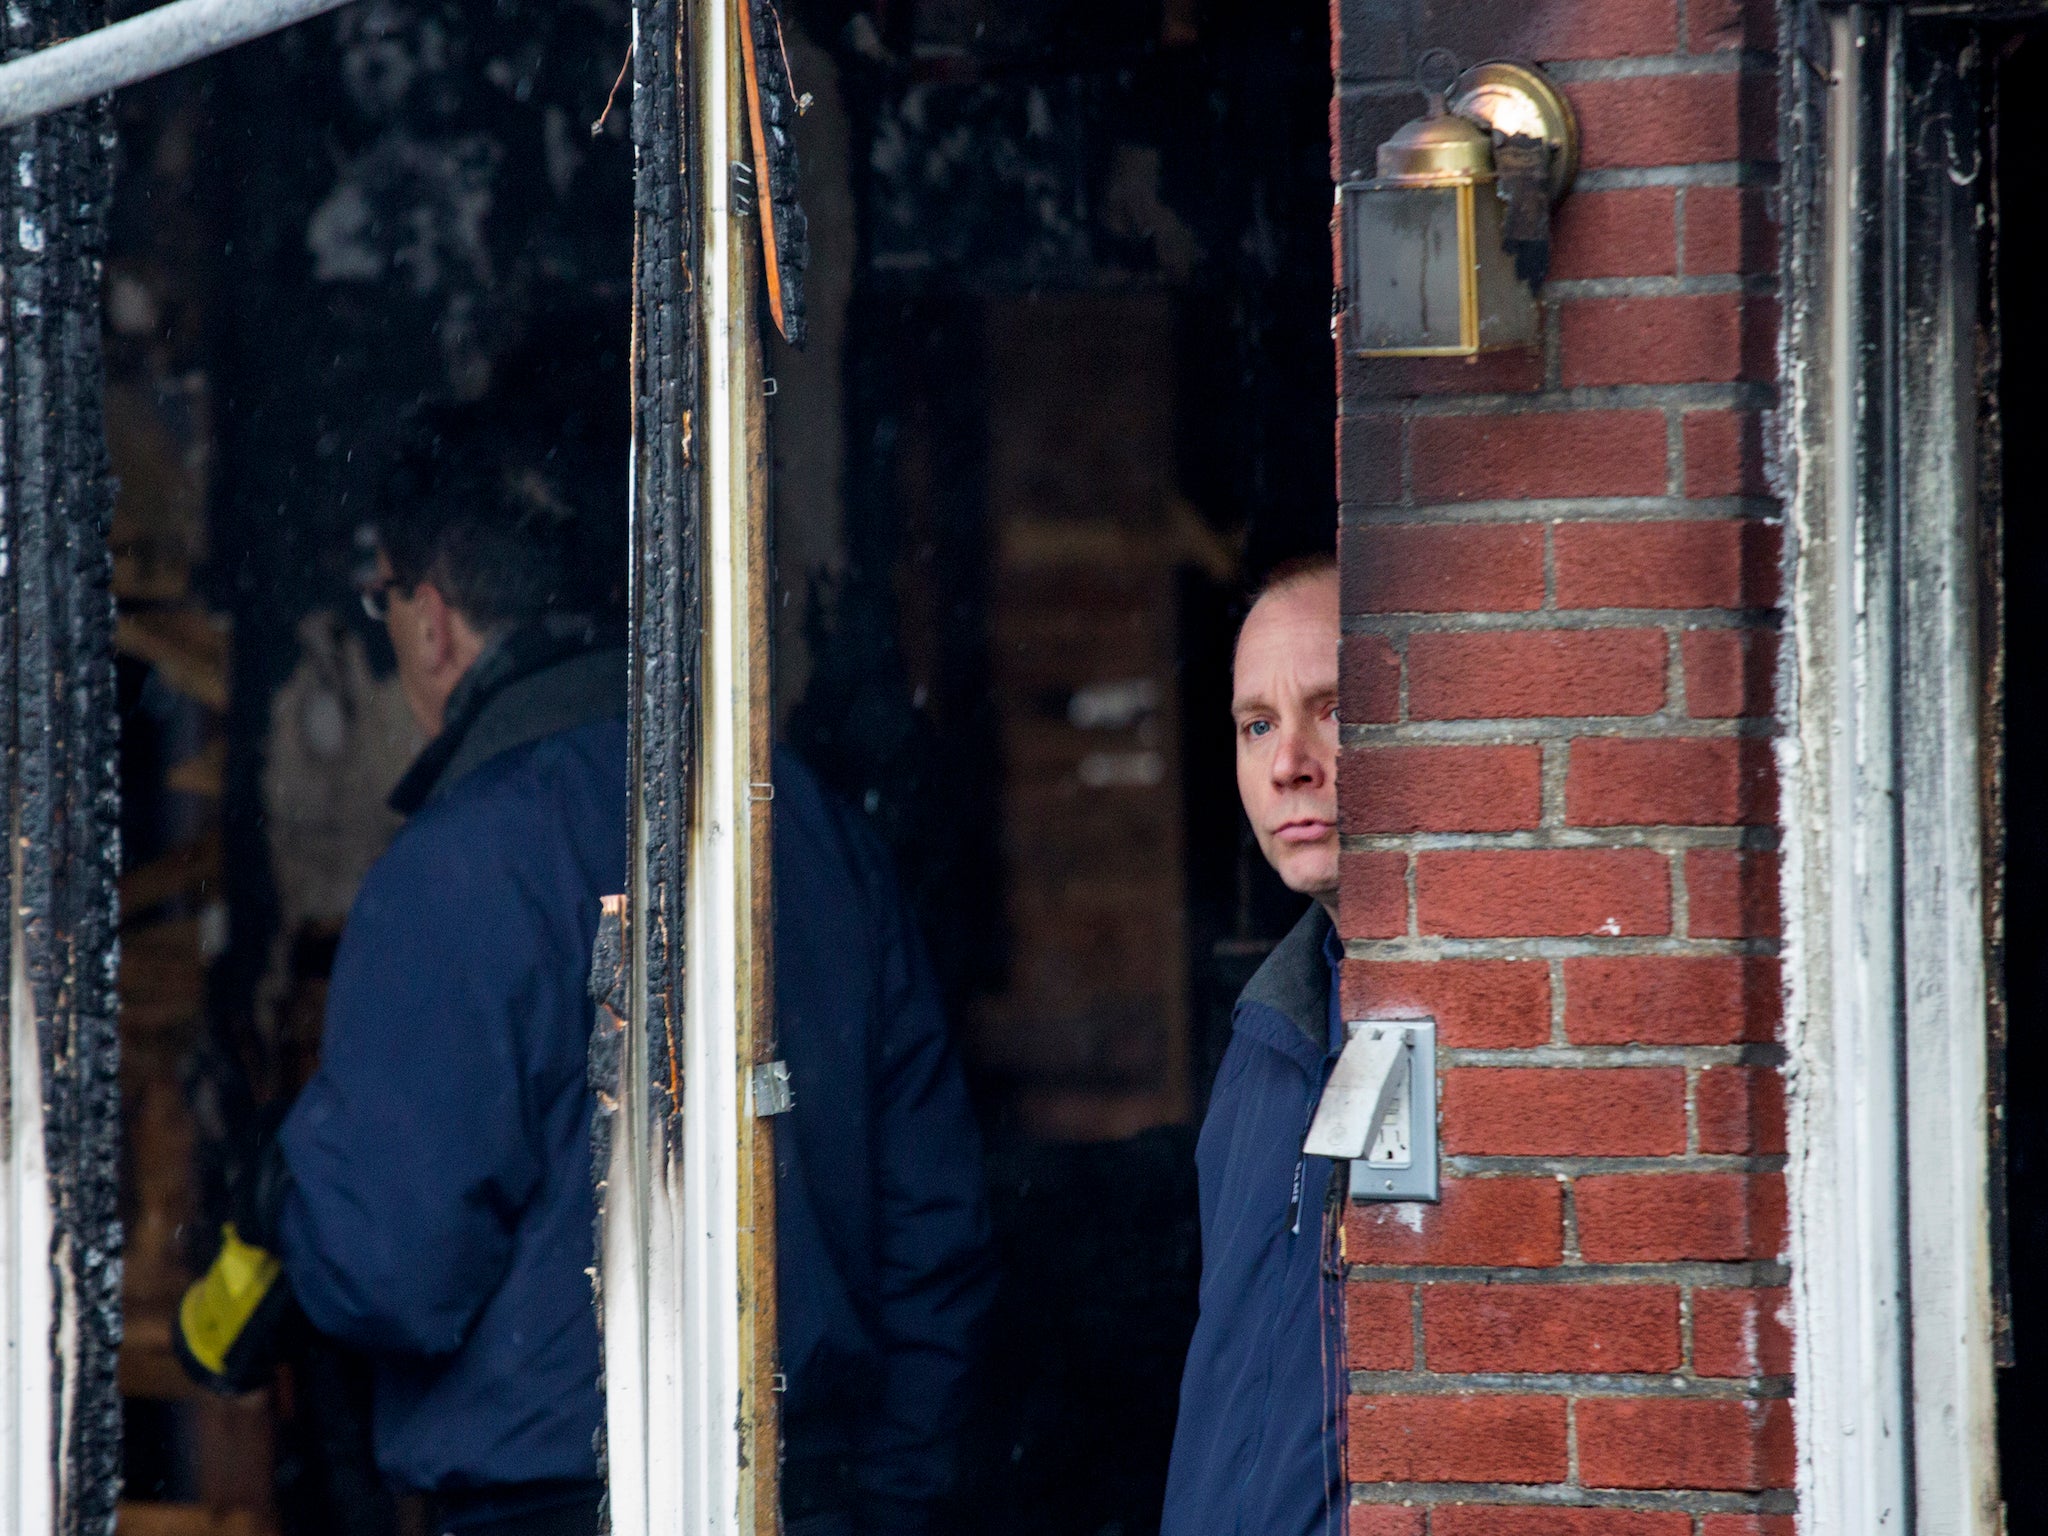 Fire investigators at the scene of the deadly Brooklyn blaze